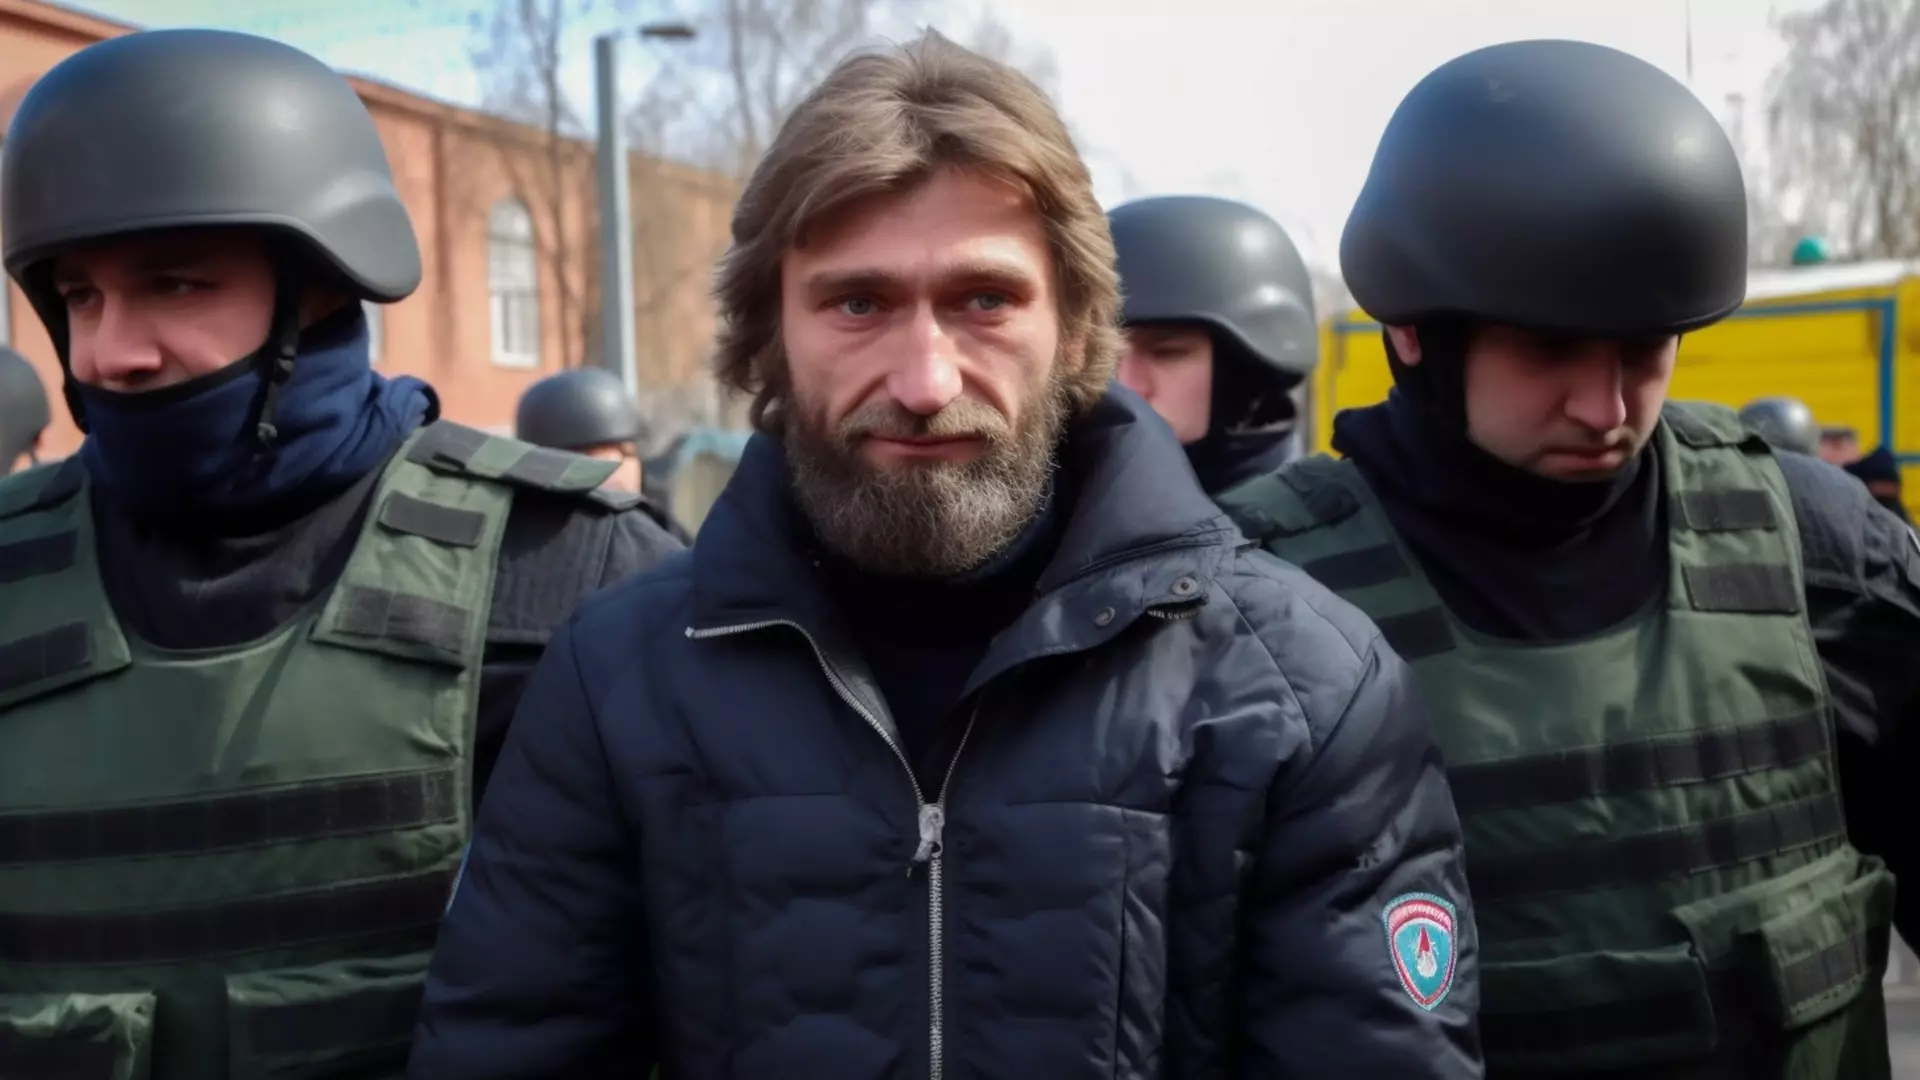 За попытку продажи синтетического наркотика в центре Ижевска задержан мужчина